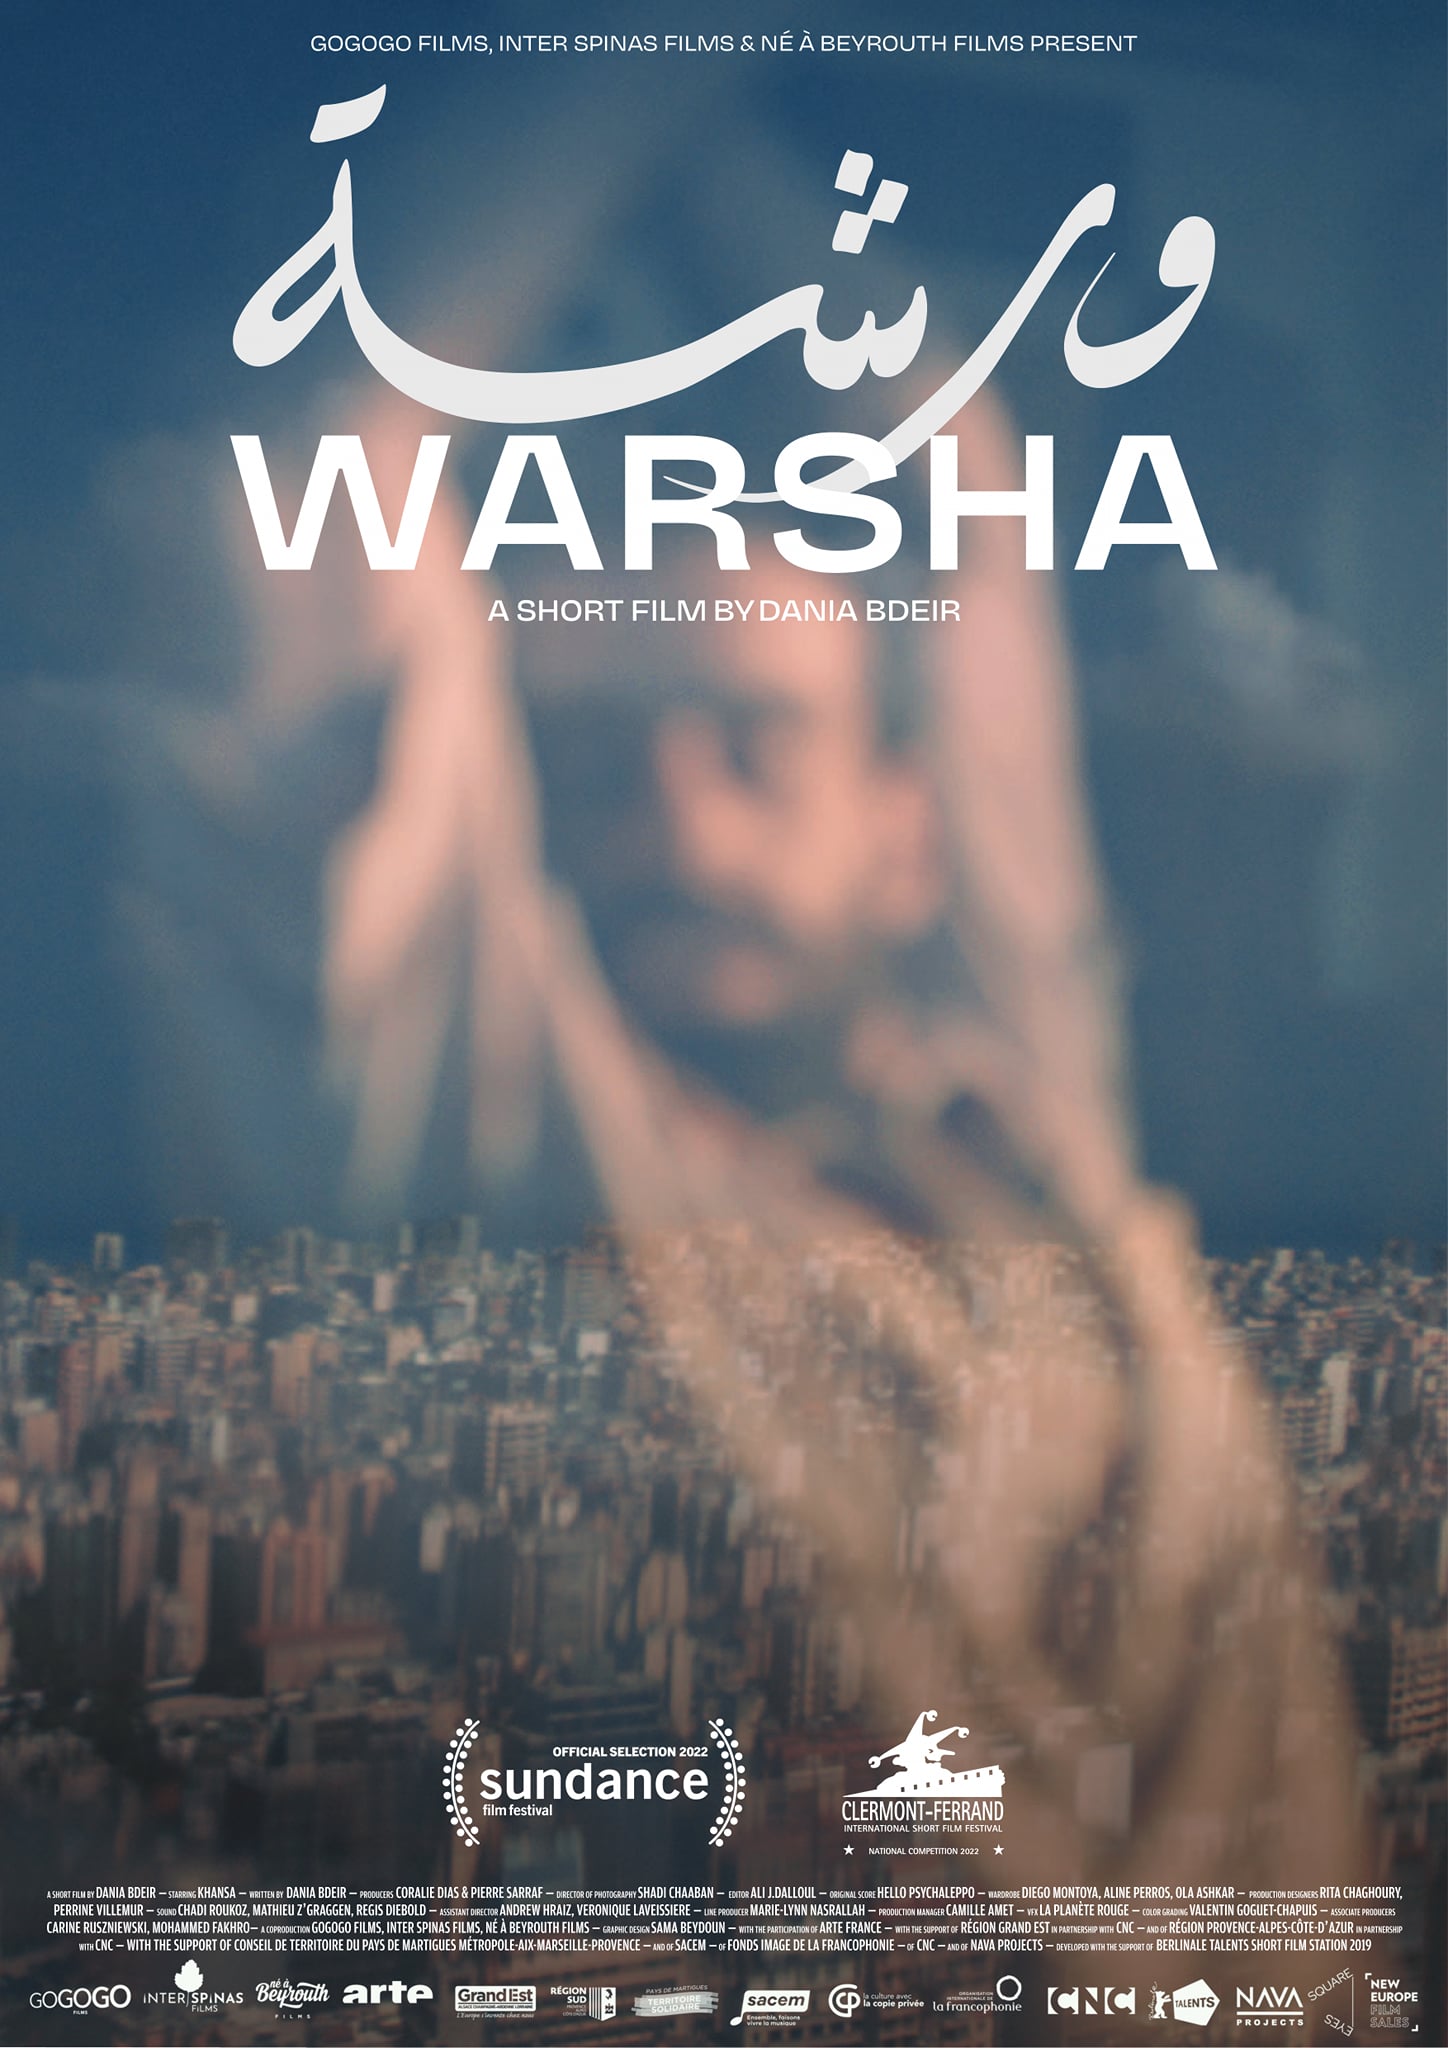 Film poster "Warsha" (source: imdb.com)